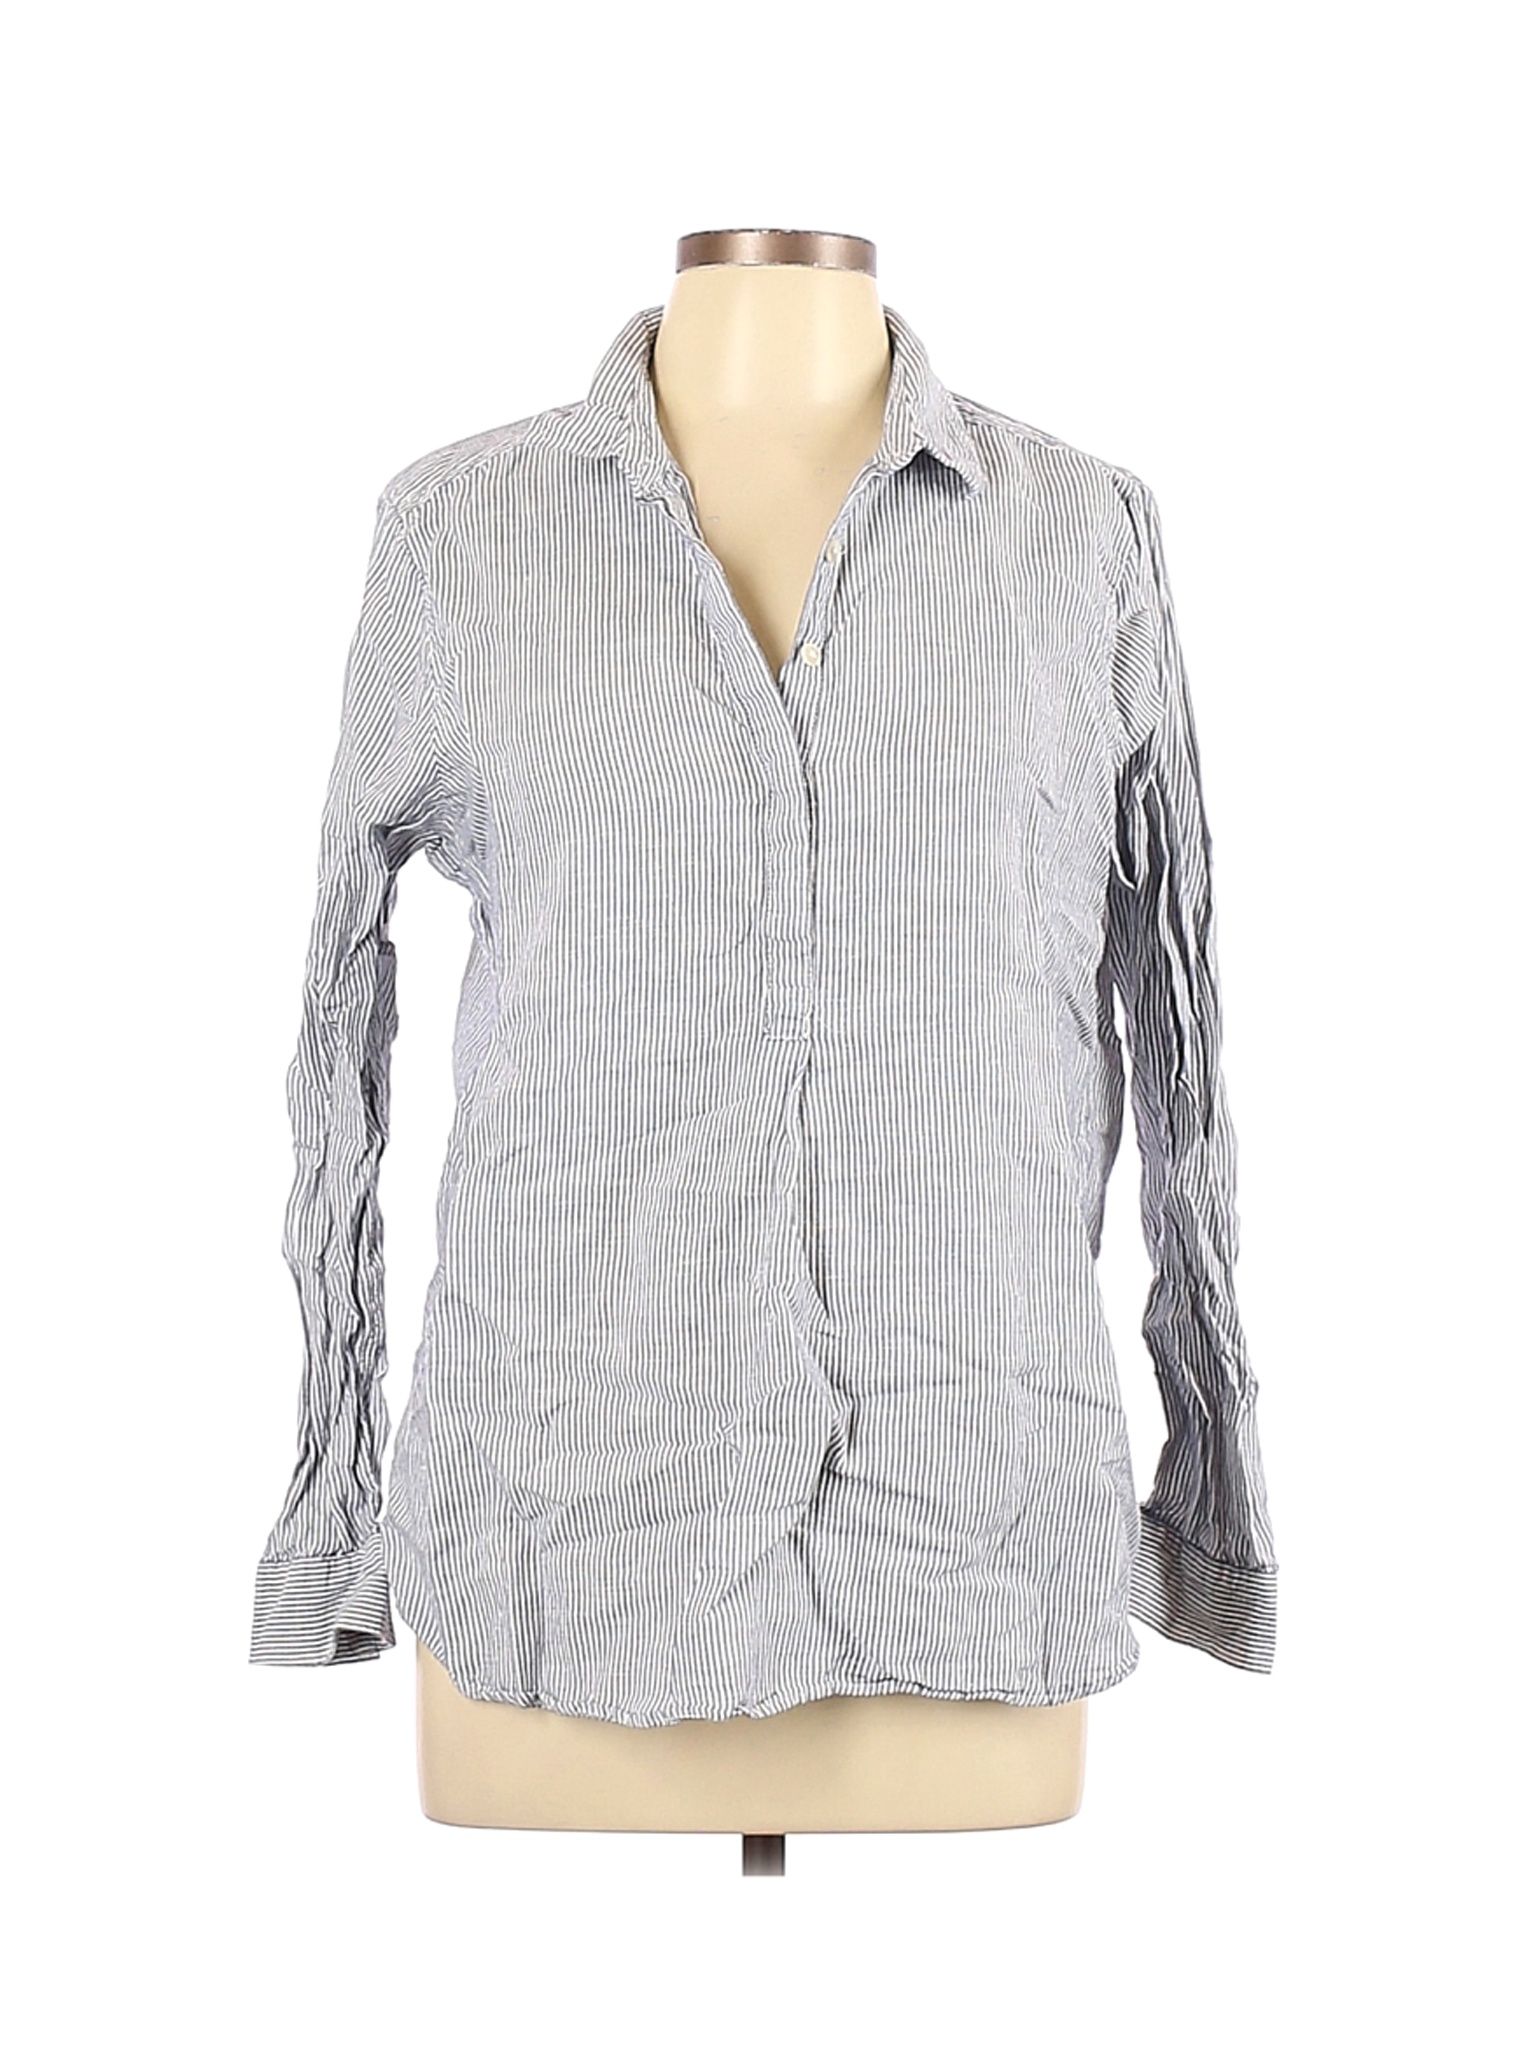 Eddie Bauer Women Gray Long Sleeve Blouse L | eBay